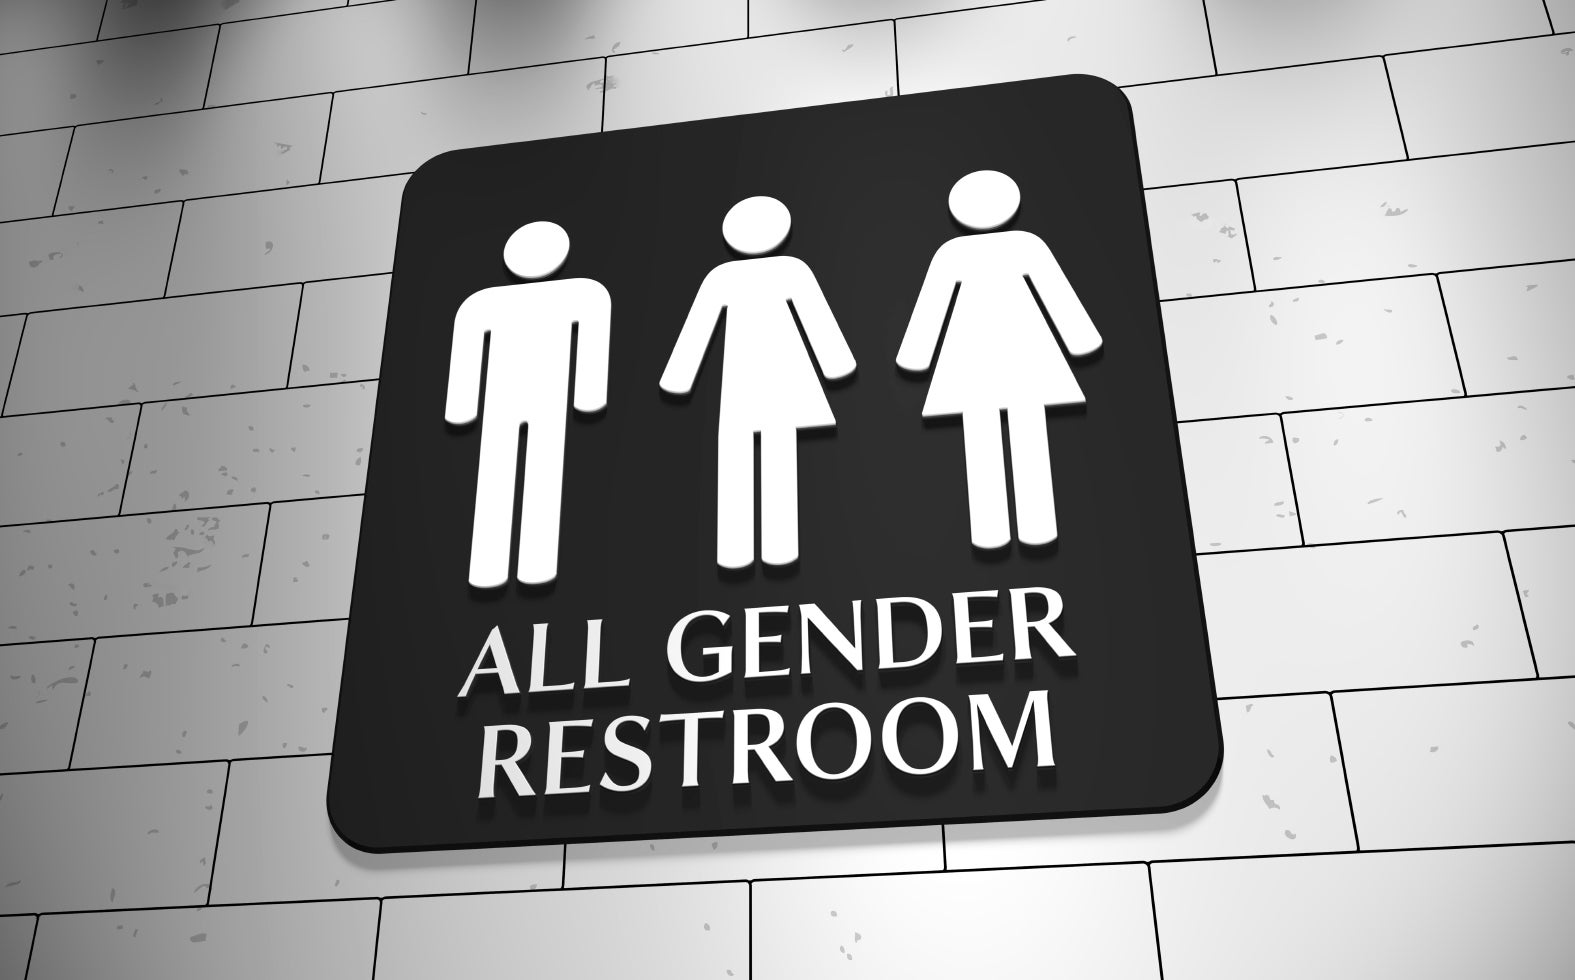 A gender neutral bathroom is shown.